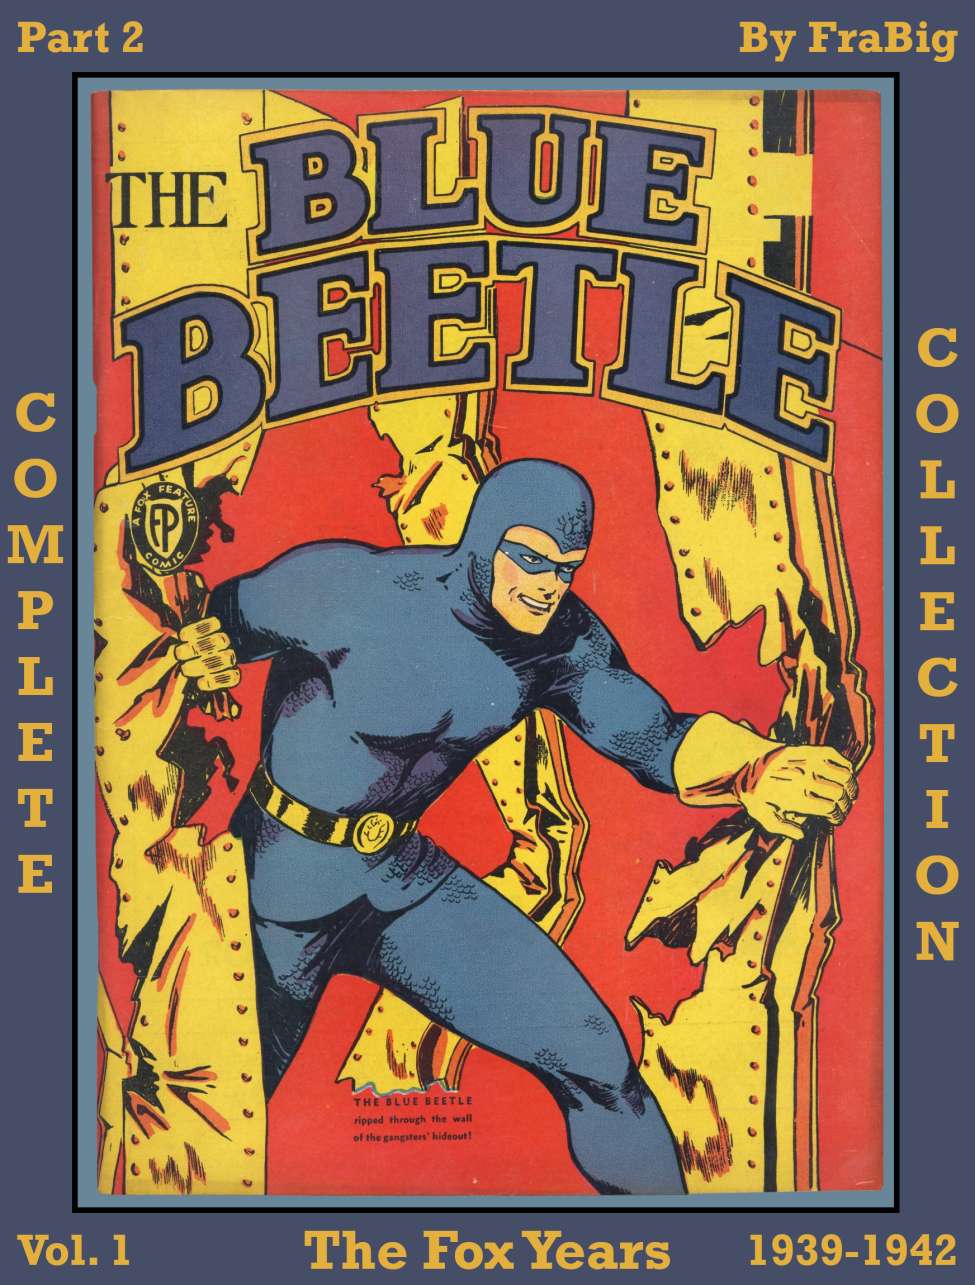 Blue beetle comic books issue 2